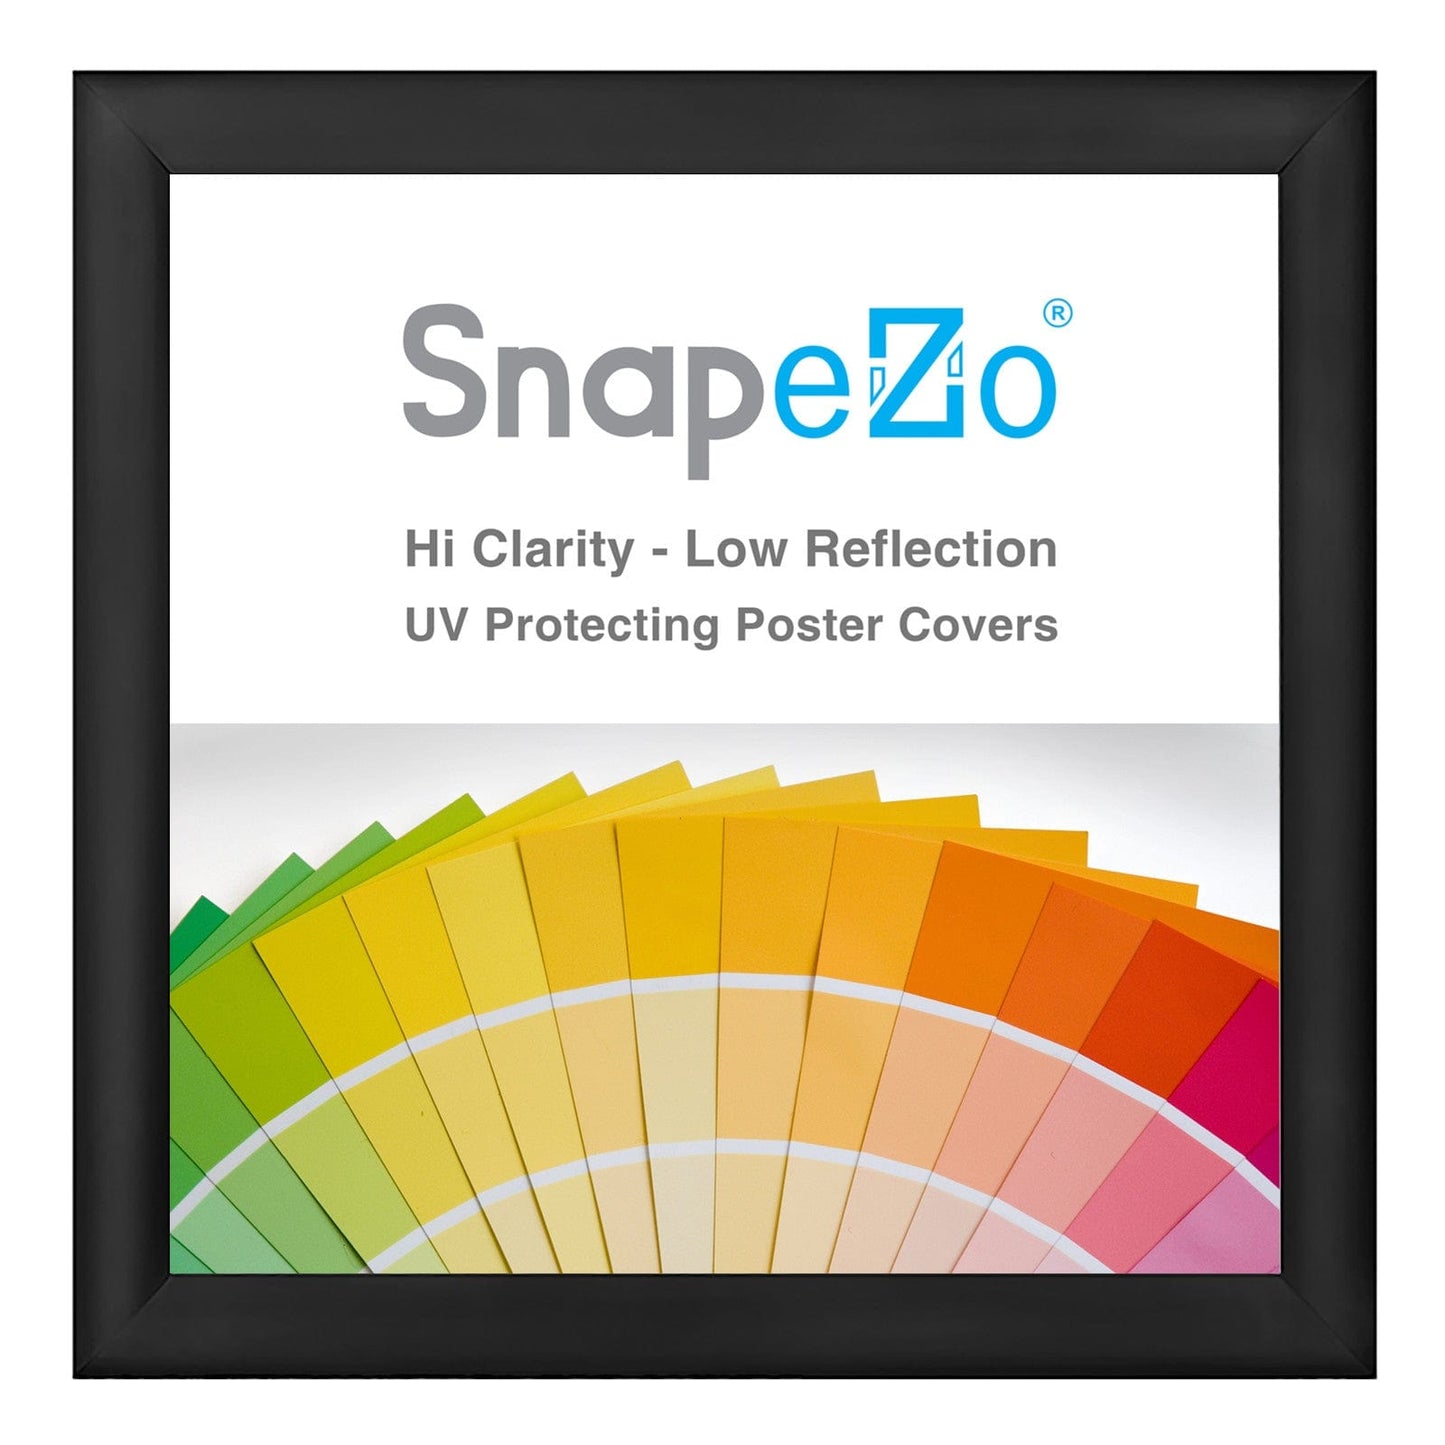 29x30 Black SnapeZo® Snap Frame - 1.2" Profile - Snap Frames Direct